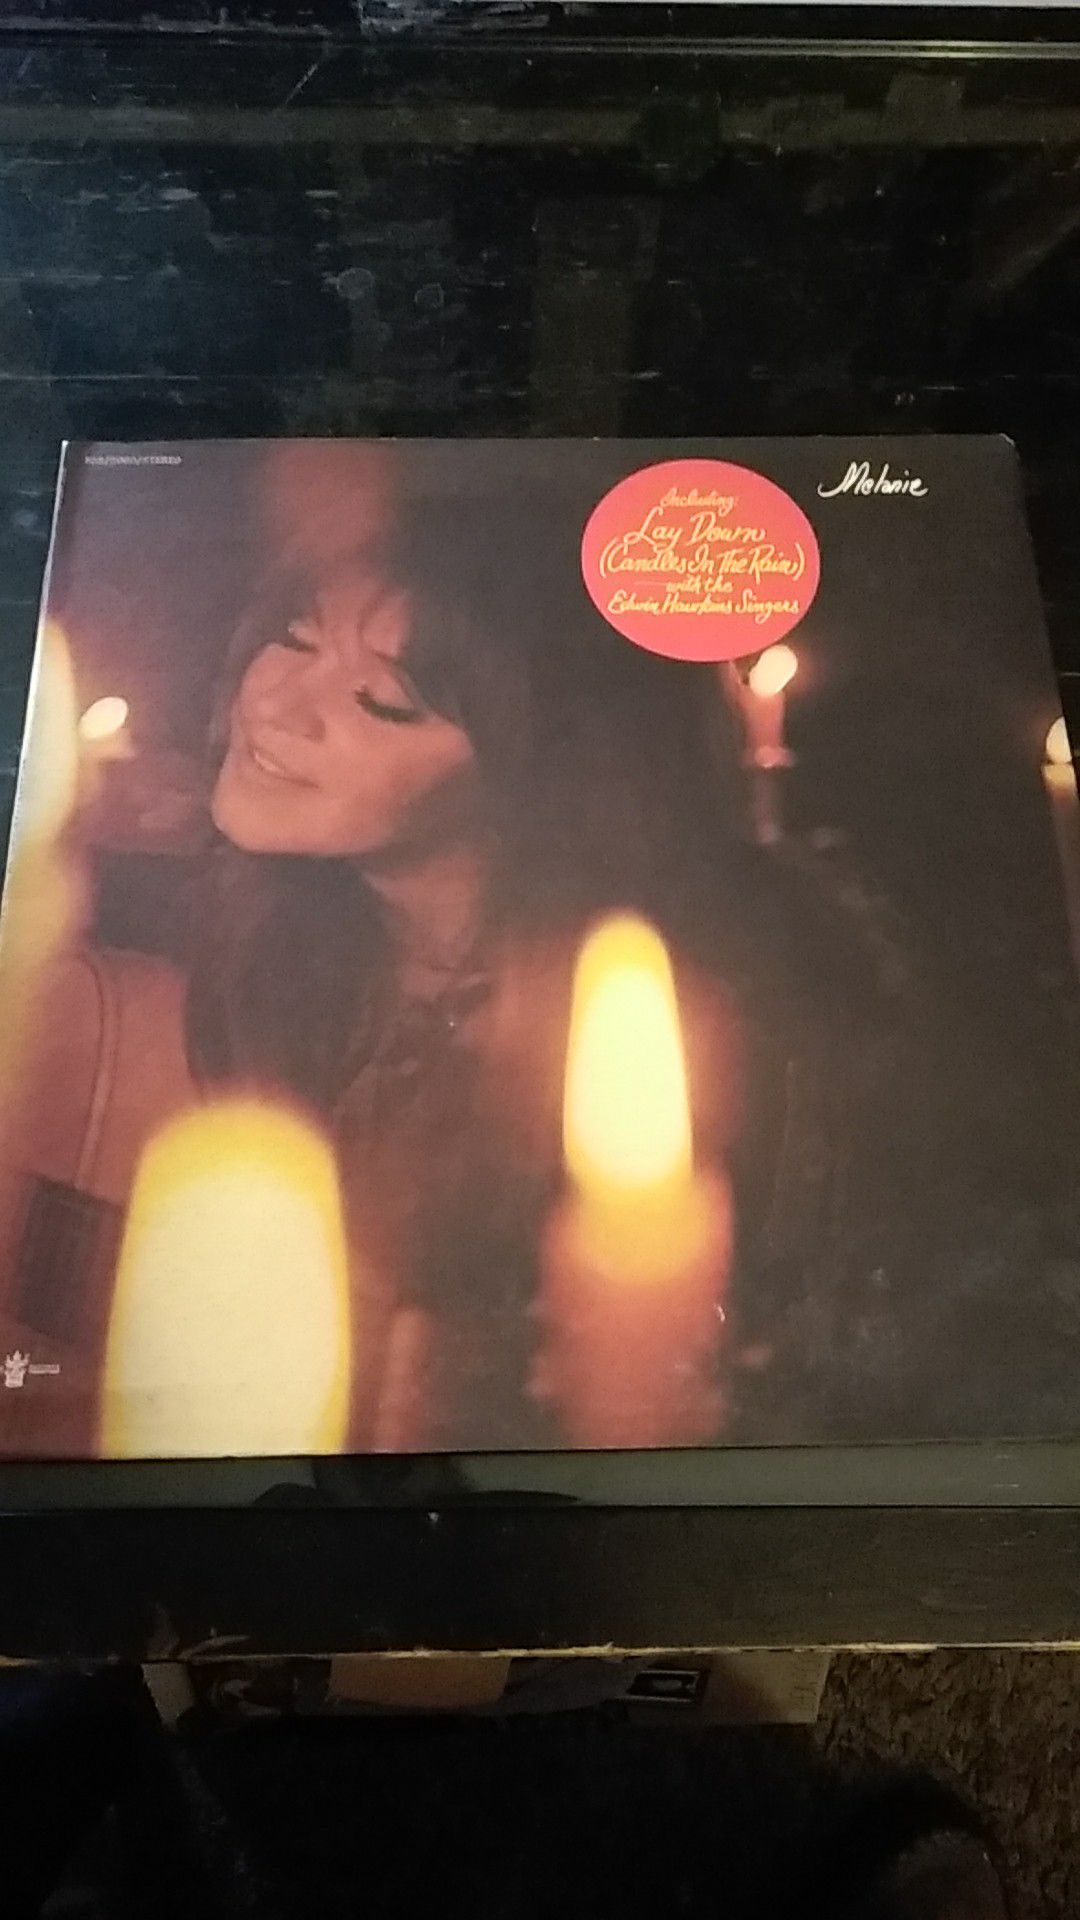 Melanie Lay Down Candles in the rain with Edwin Hawkins singers vinyl album